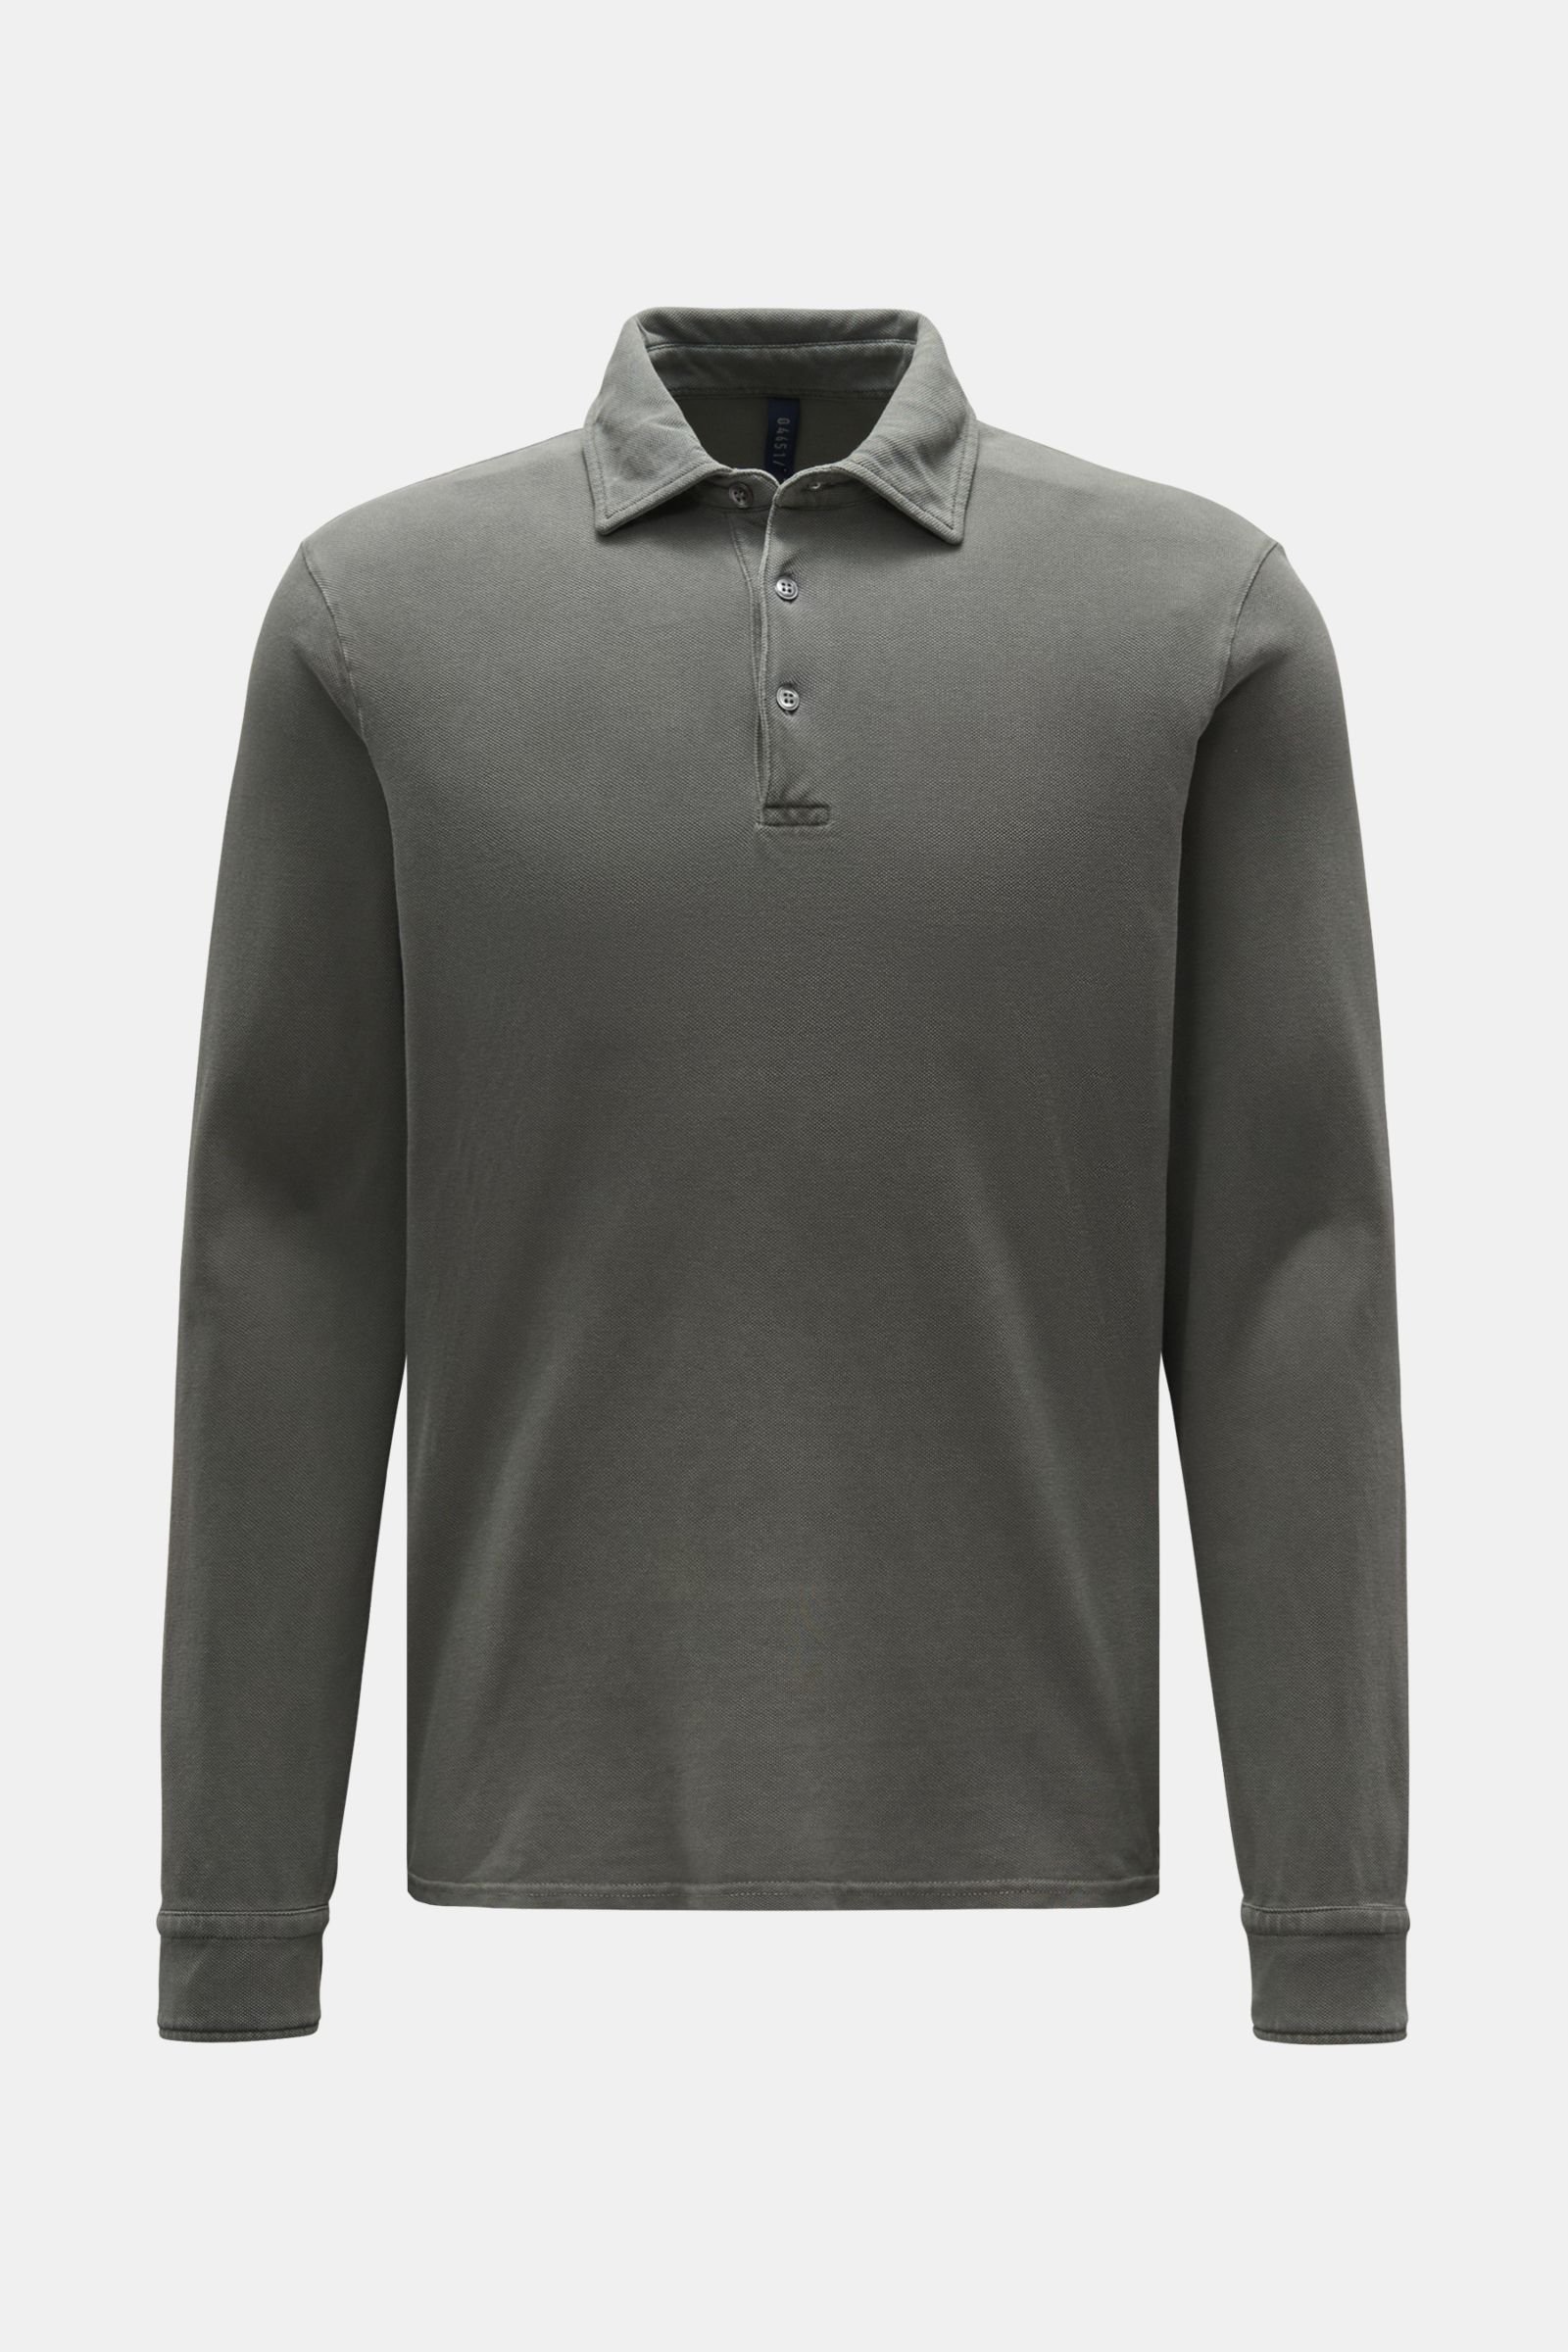 Long sleeve polo shirt grey-green